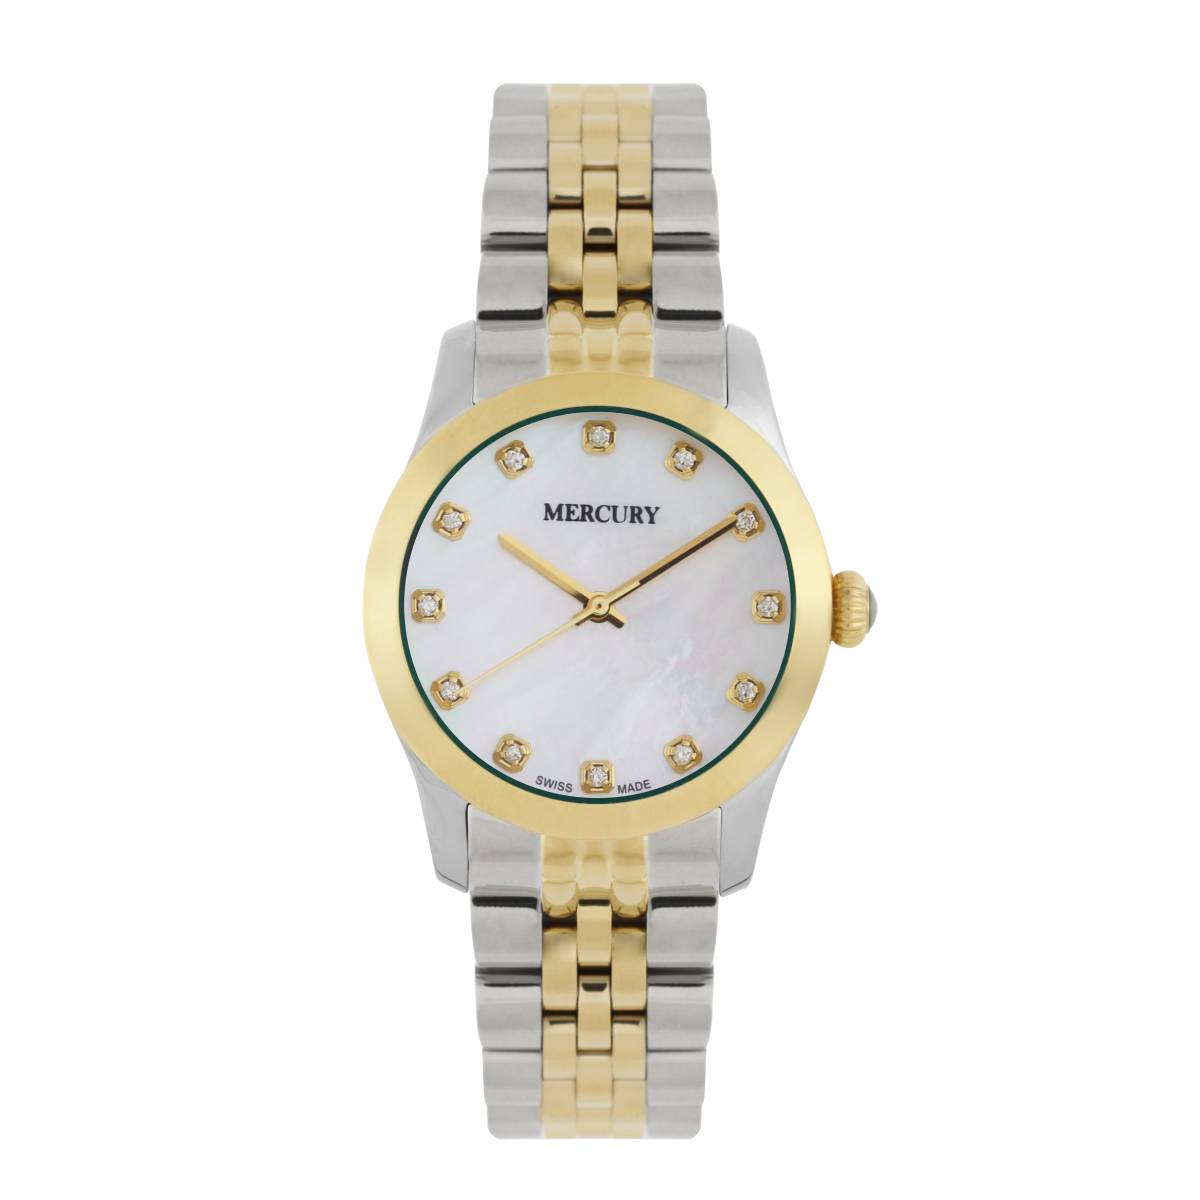 Mercury Women's Swiss Quartz Watch with Pearly White Dial - MER-0024